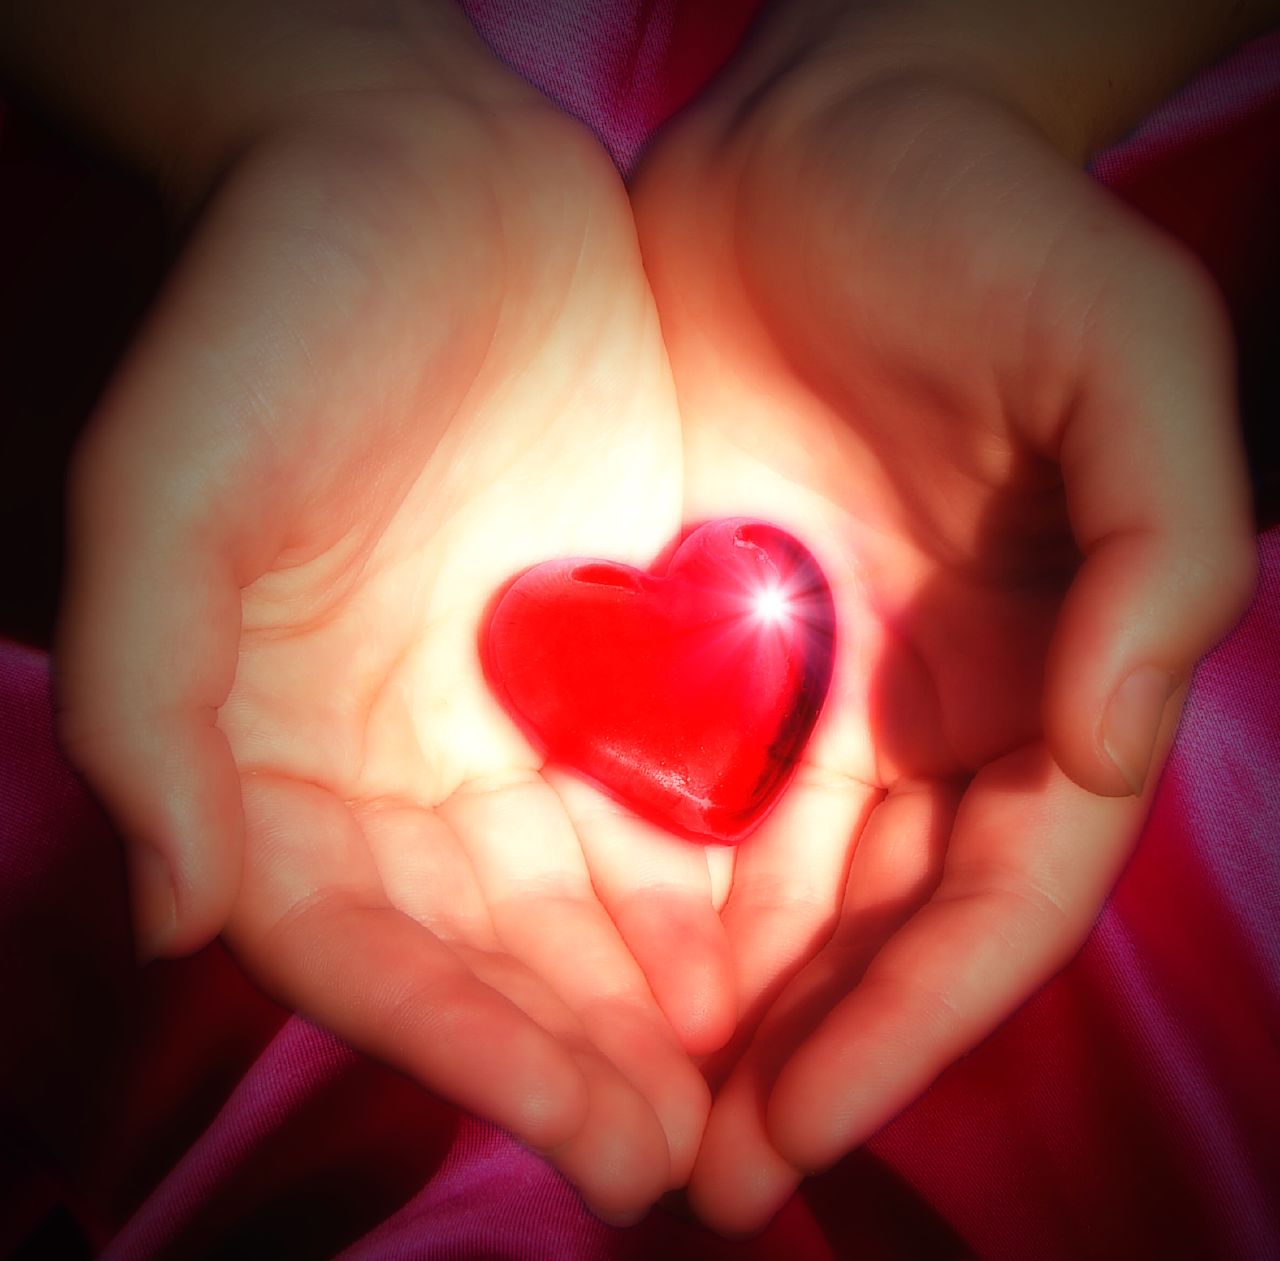 LOVE - HEART IN HAND